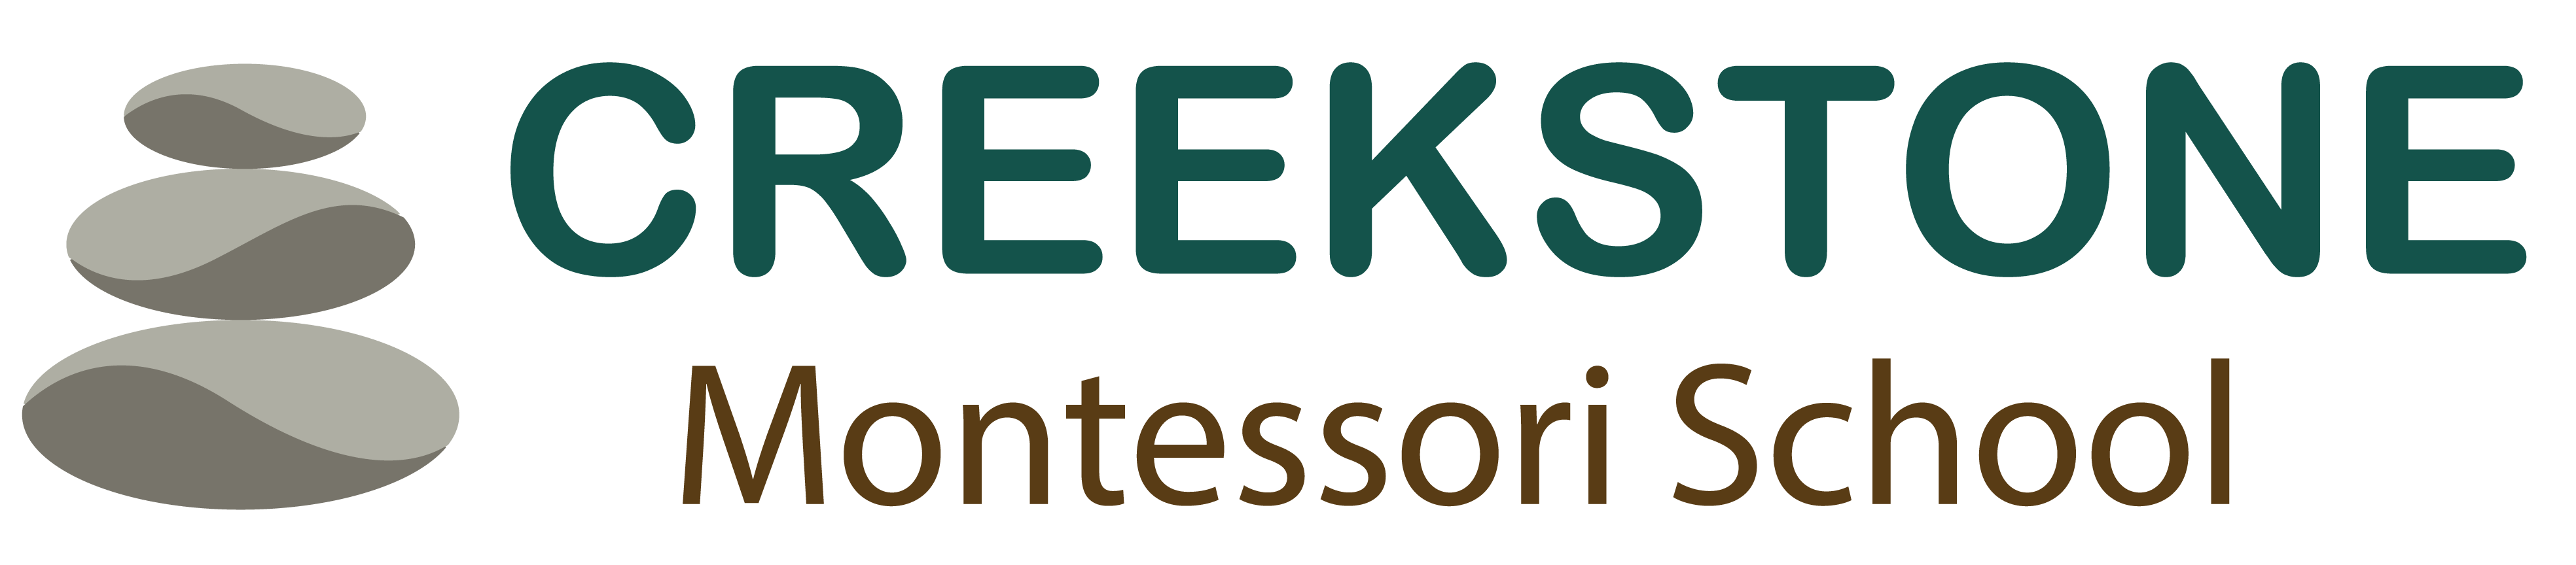 Creekstone Montessori School Logo